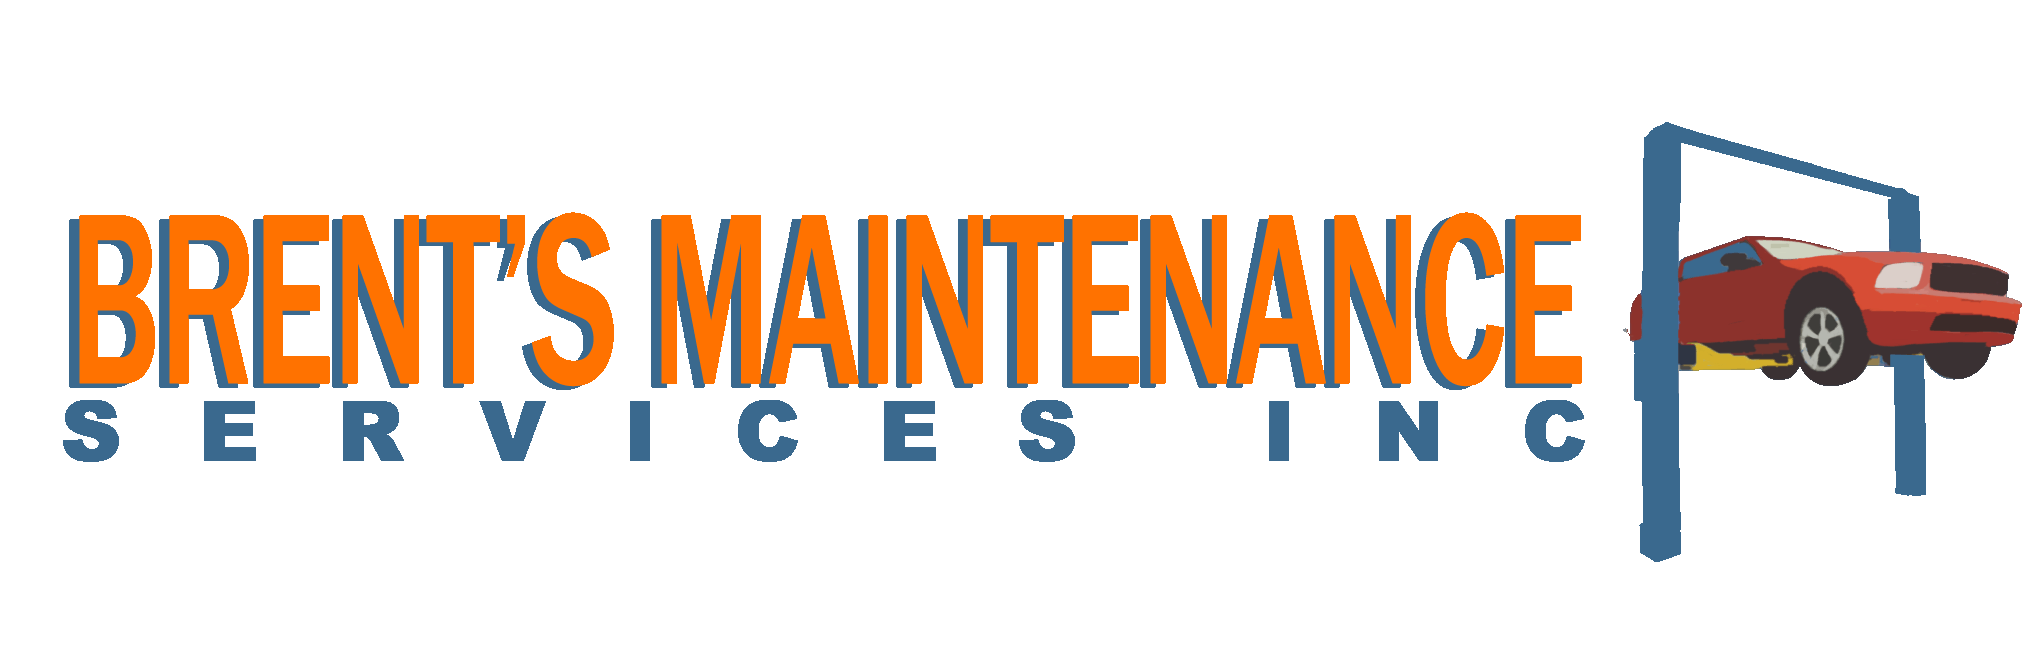 Brent's Maintenance Services